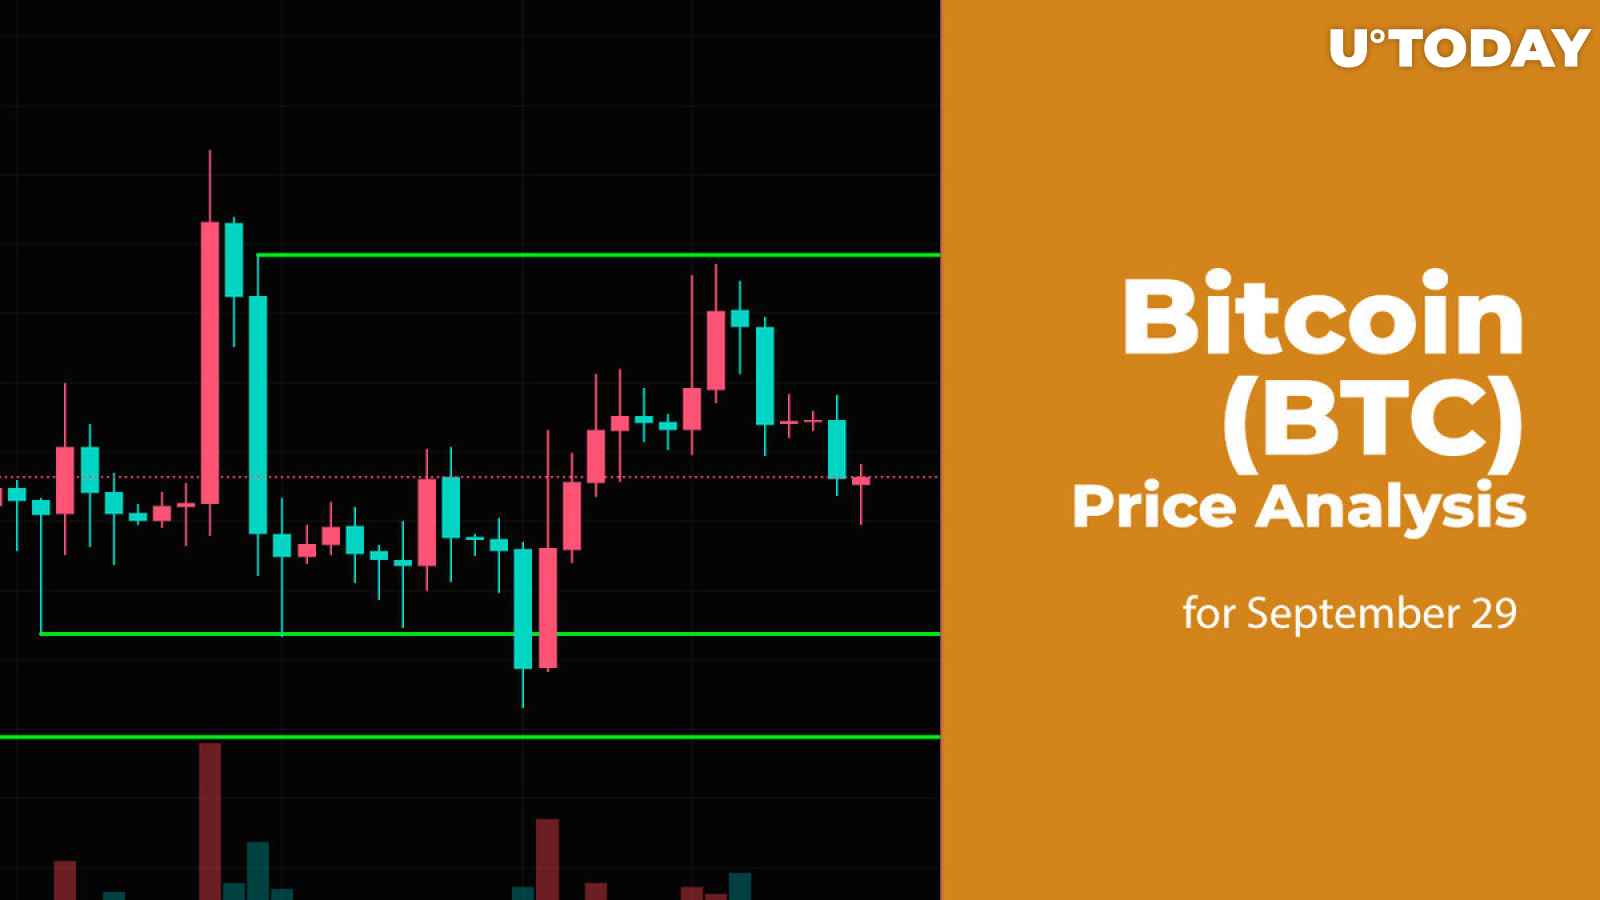 Bitcoin (BTC) Price Analysis for September 29